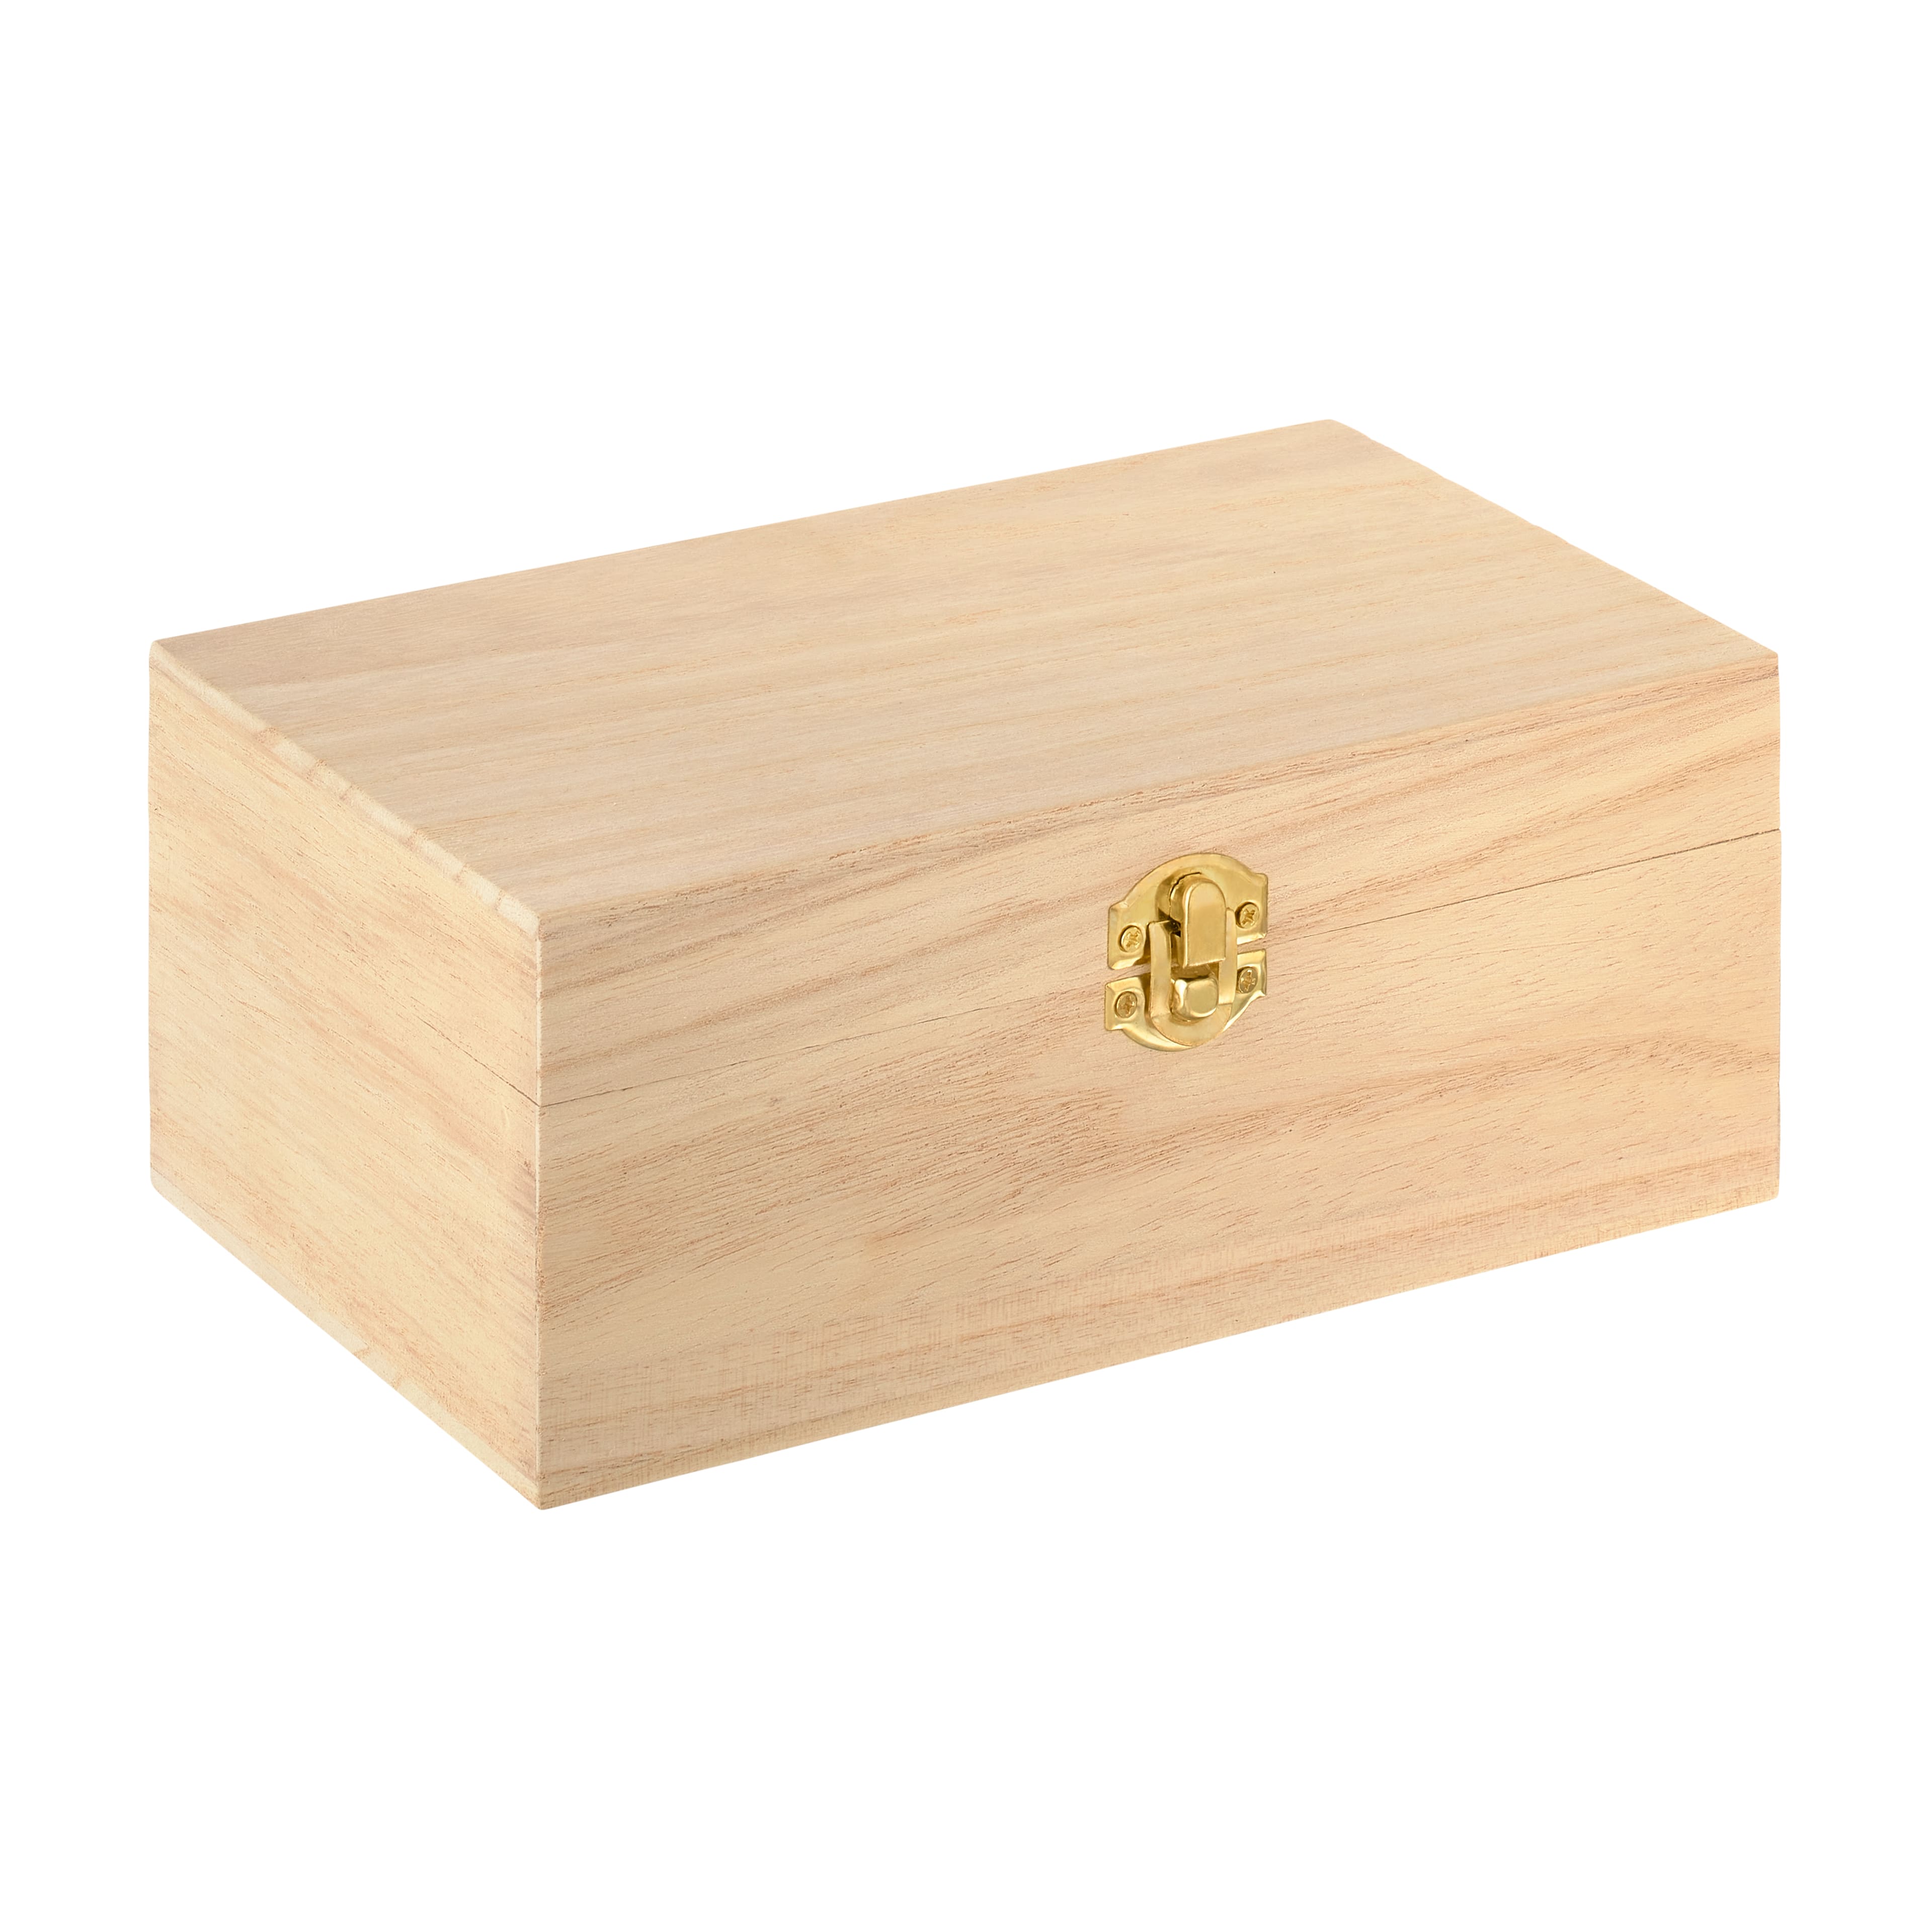 Large Wooden Box Hinged lid without Crate Extra Stylish Toy Storage XMAS 18 